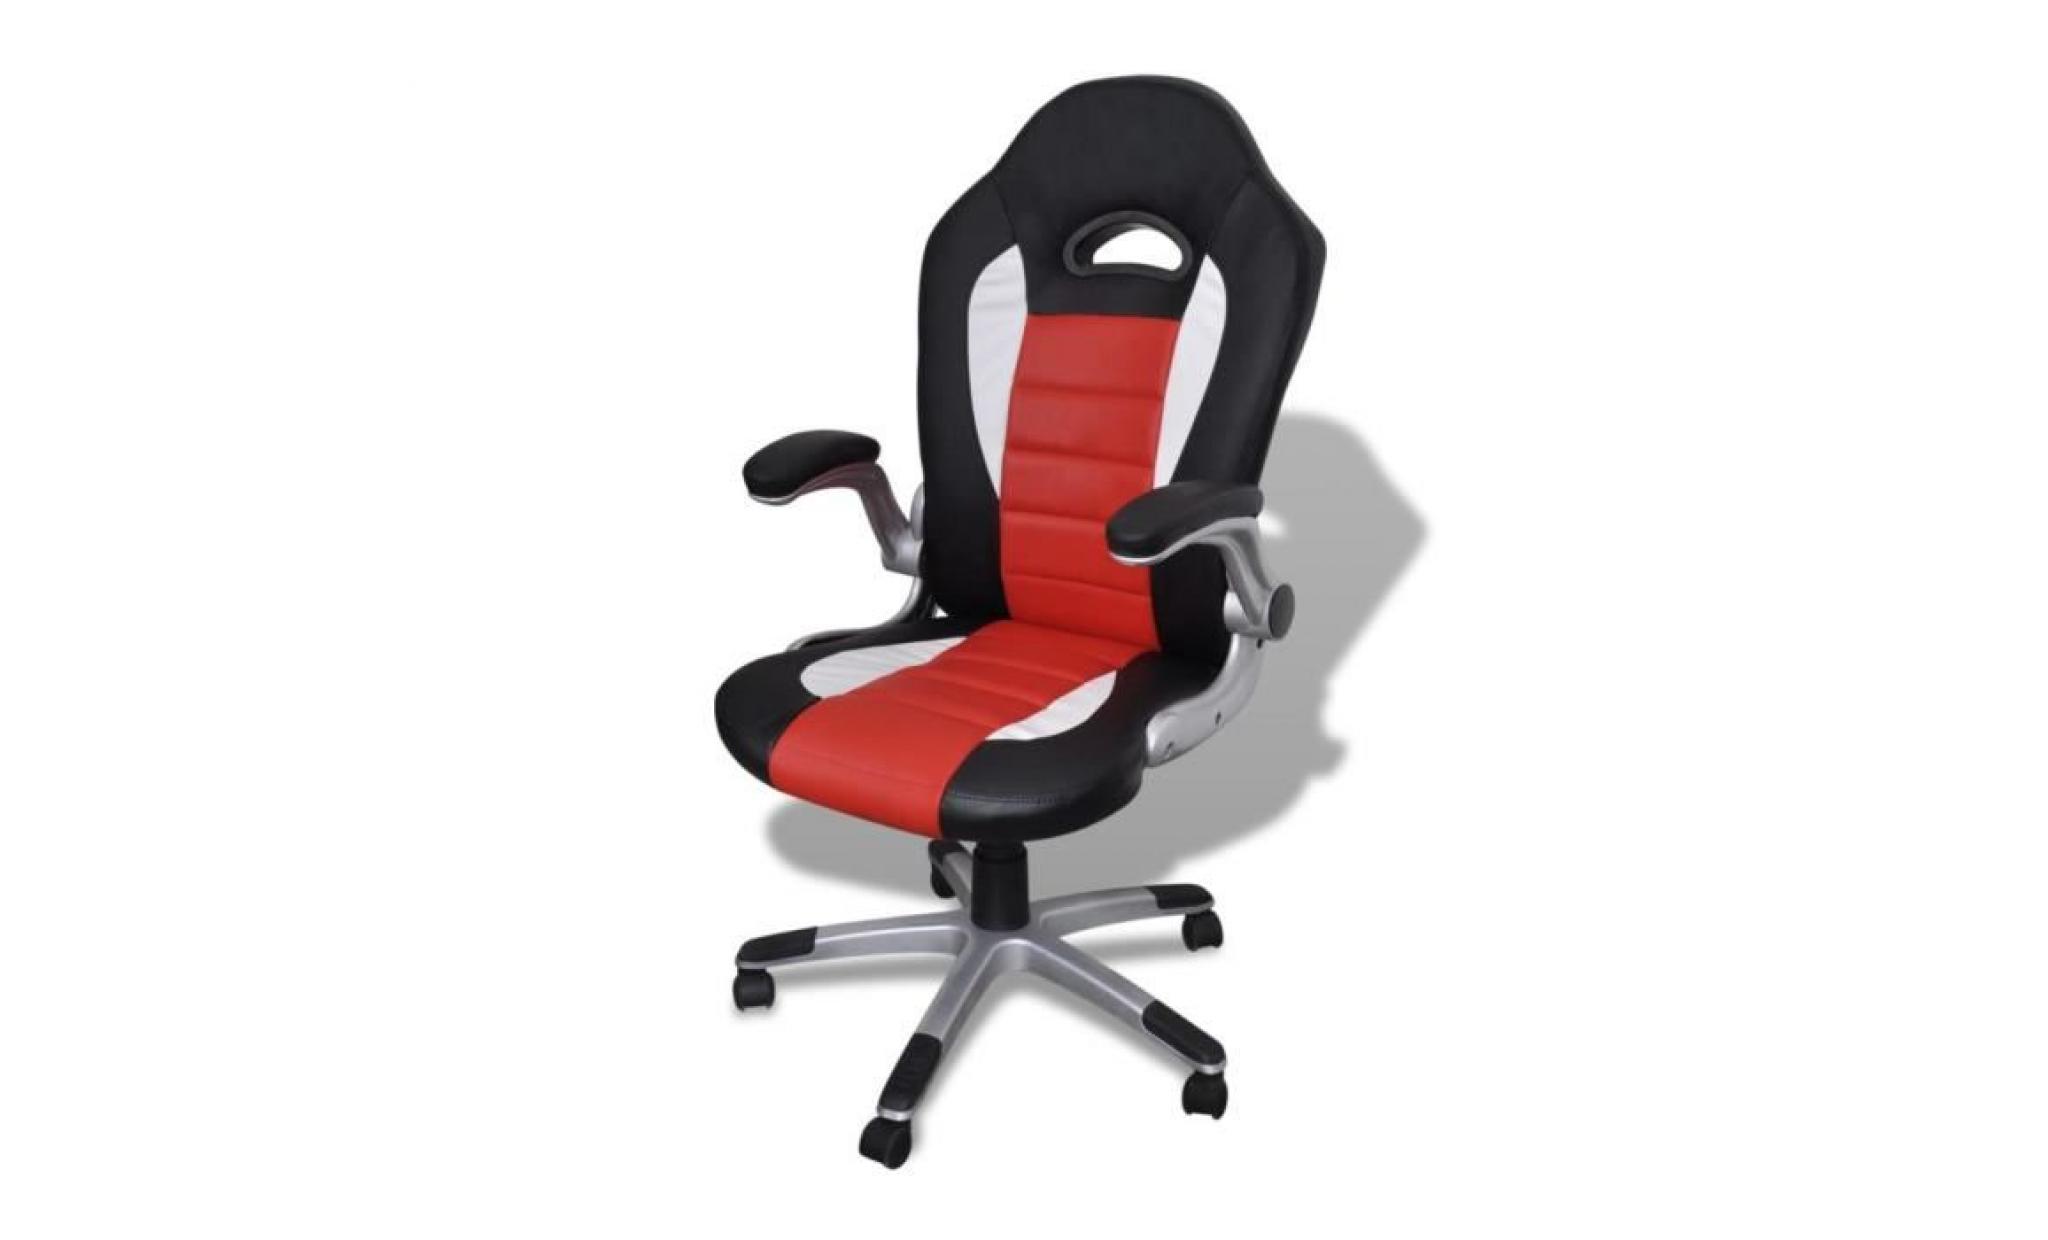 fauteuil en similicuir moderne de bureau design rouge fauteuil de bureau fauteuil gamer fauteuil relax